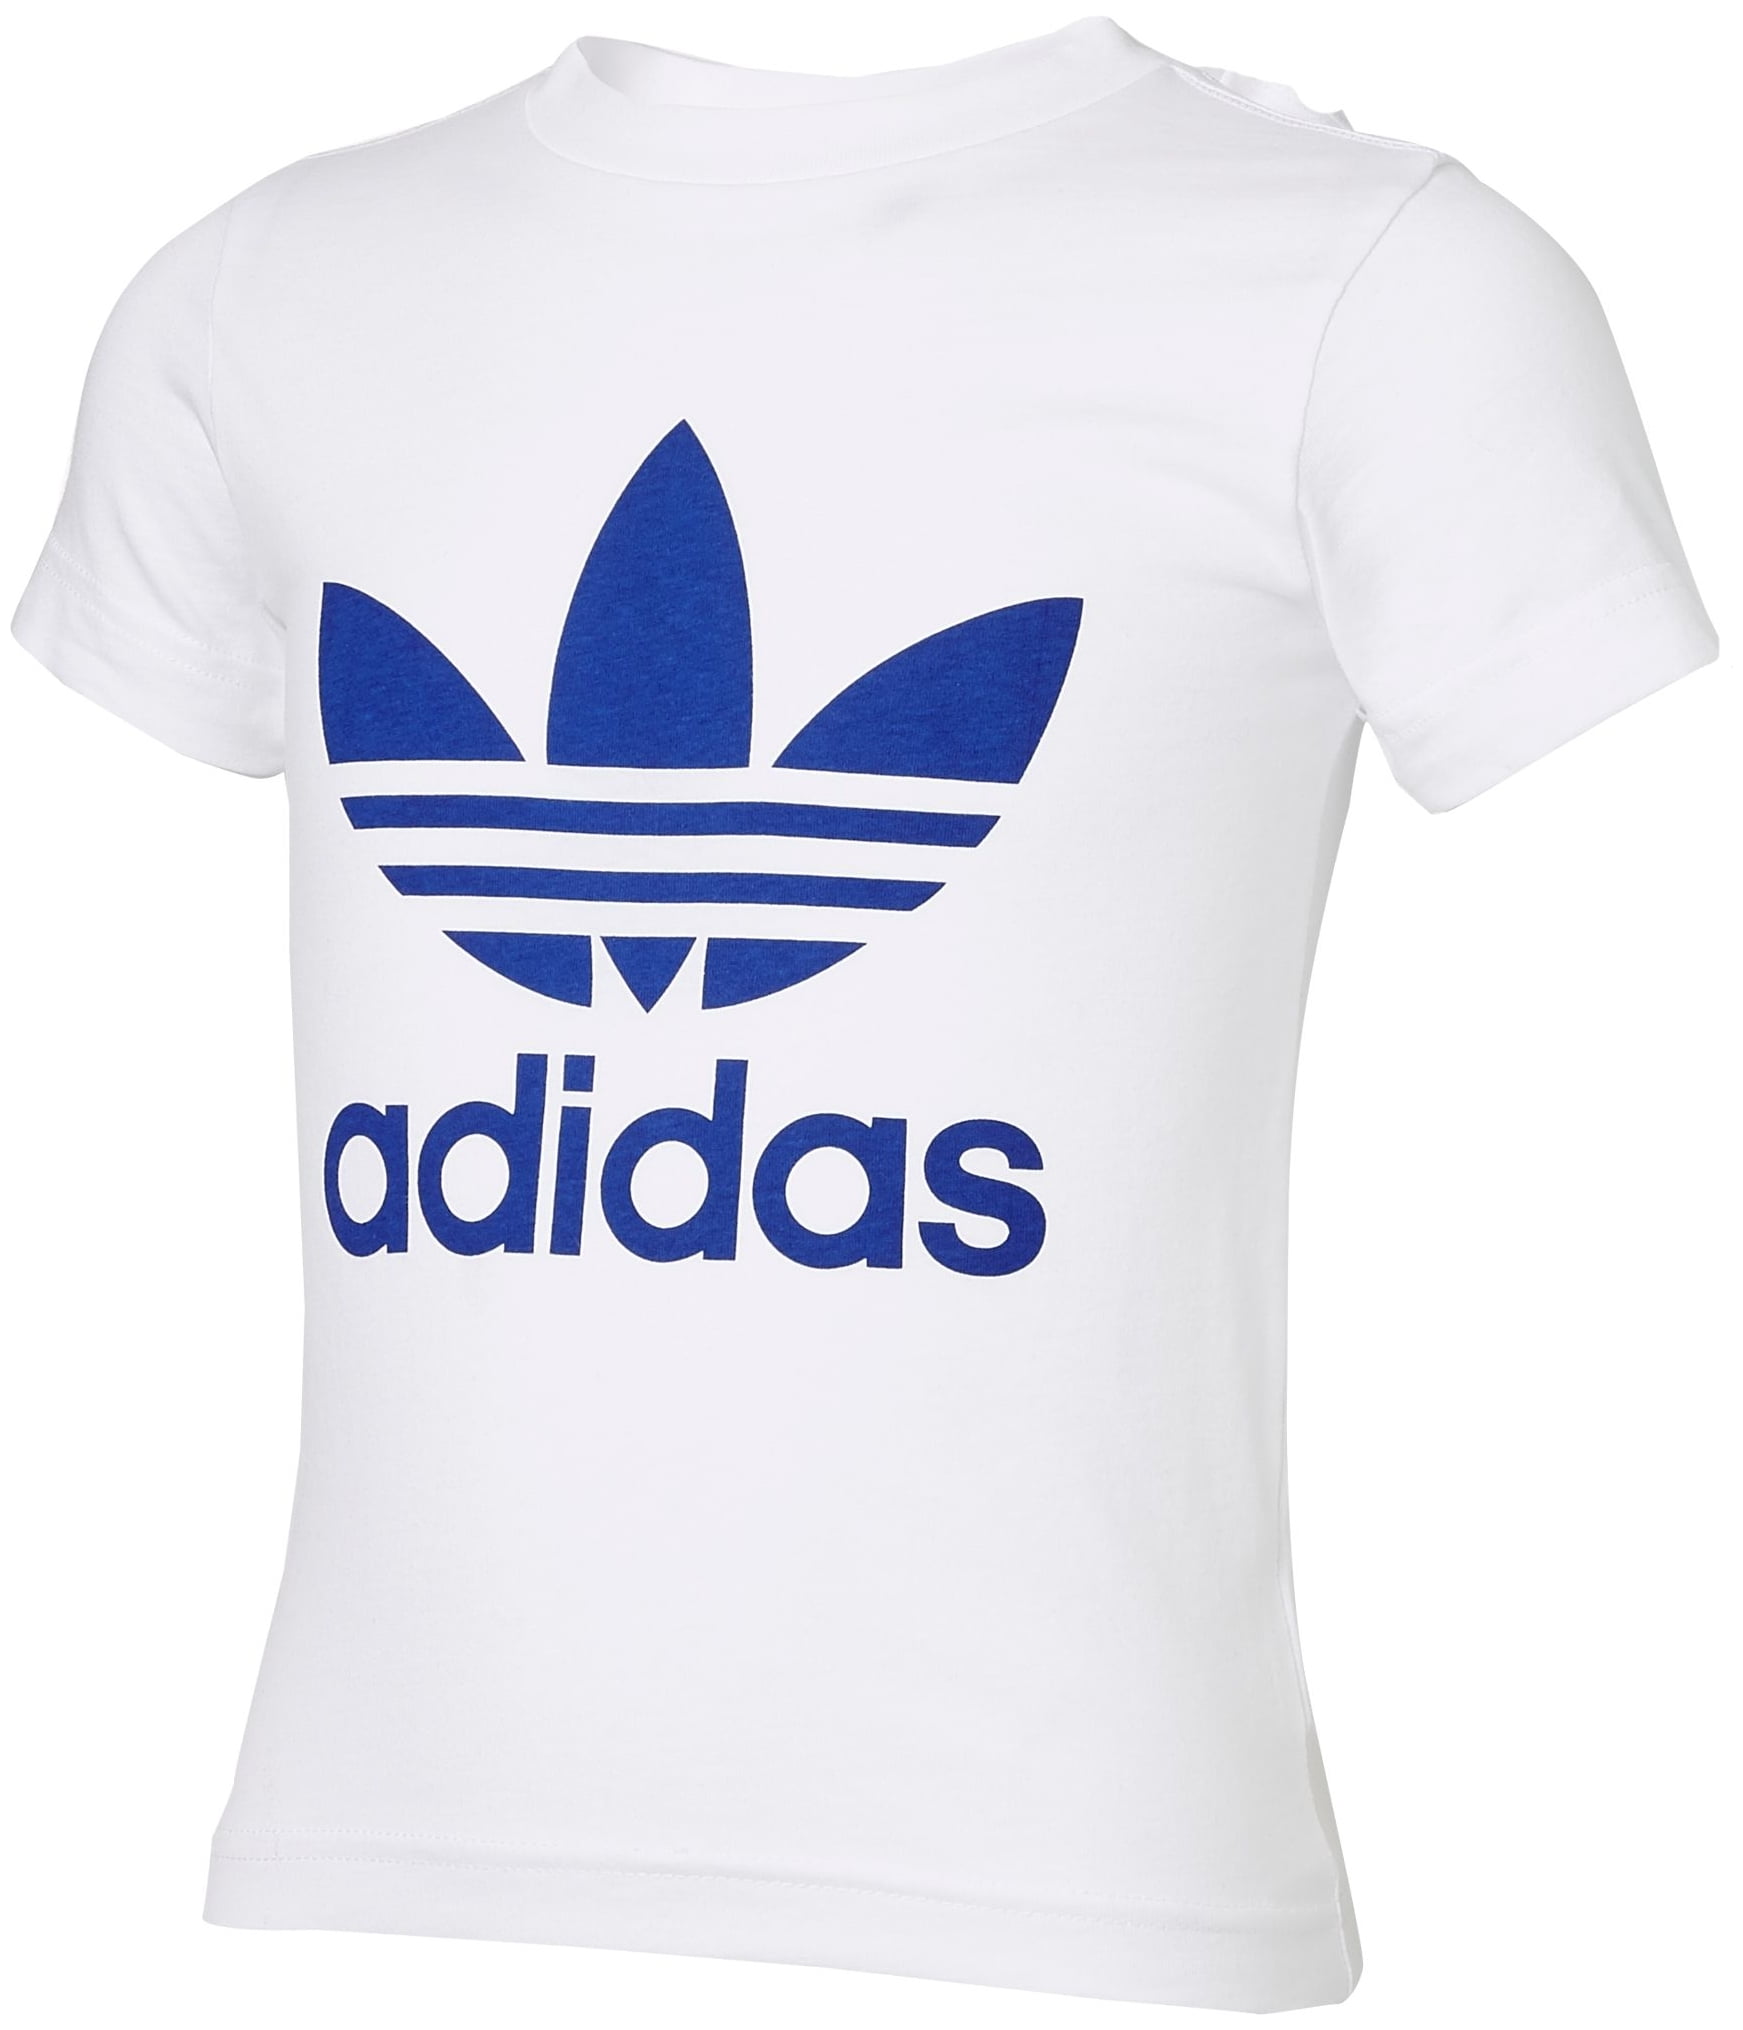 Adidas Adidas Originals Boys Trefoil Graphic T Shirt Walmart Com Walmart Com - adidas pictures t shirts roblox boy